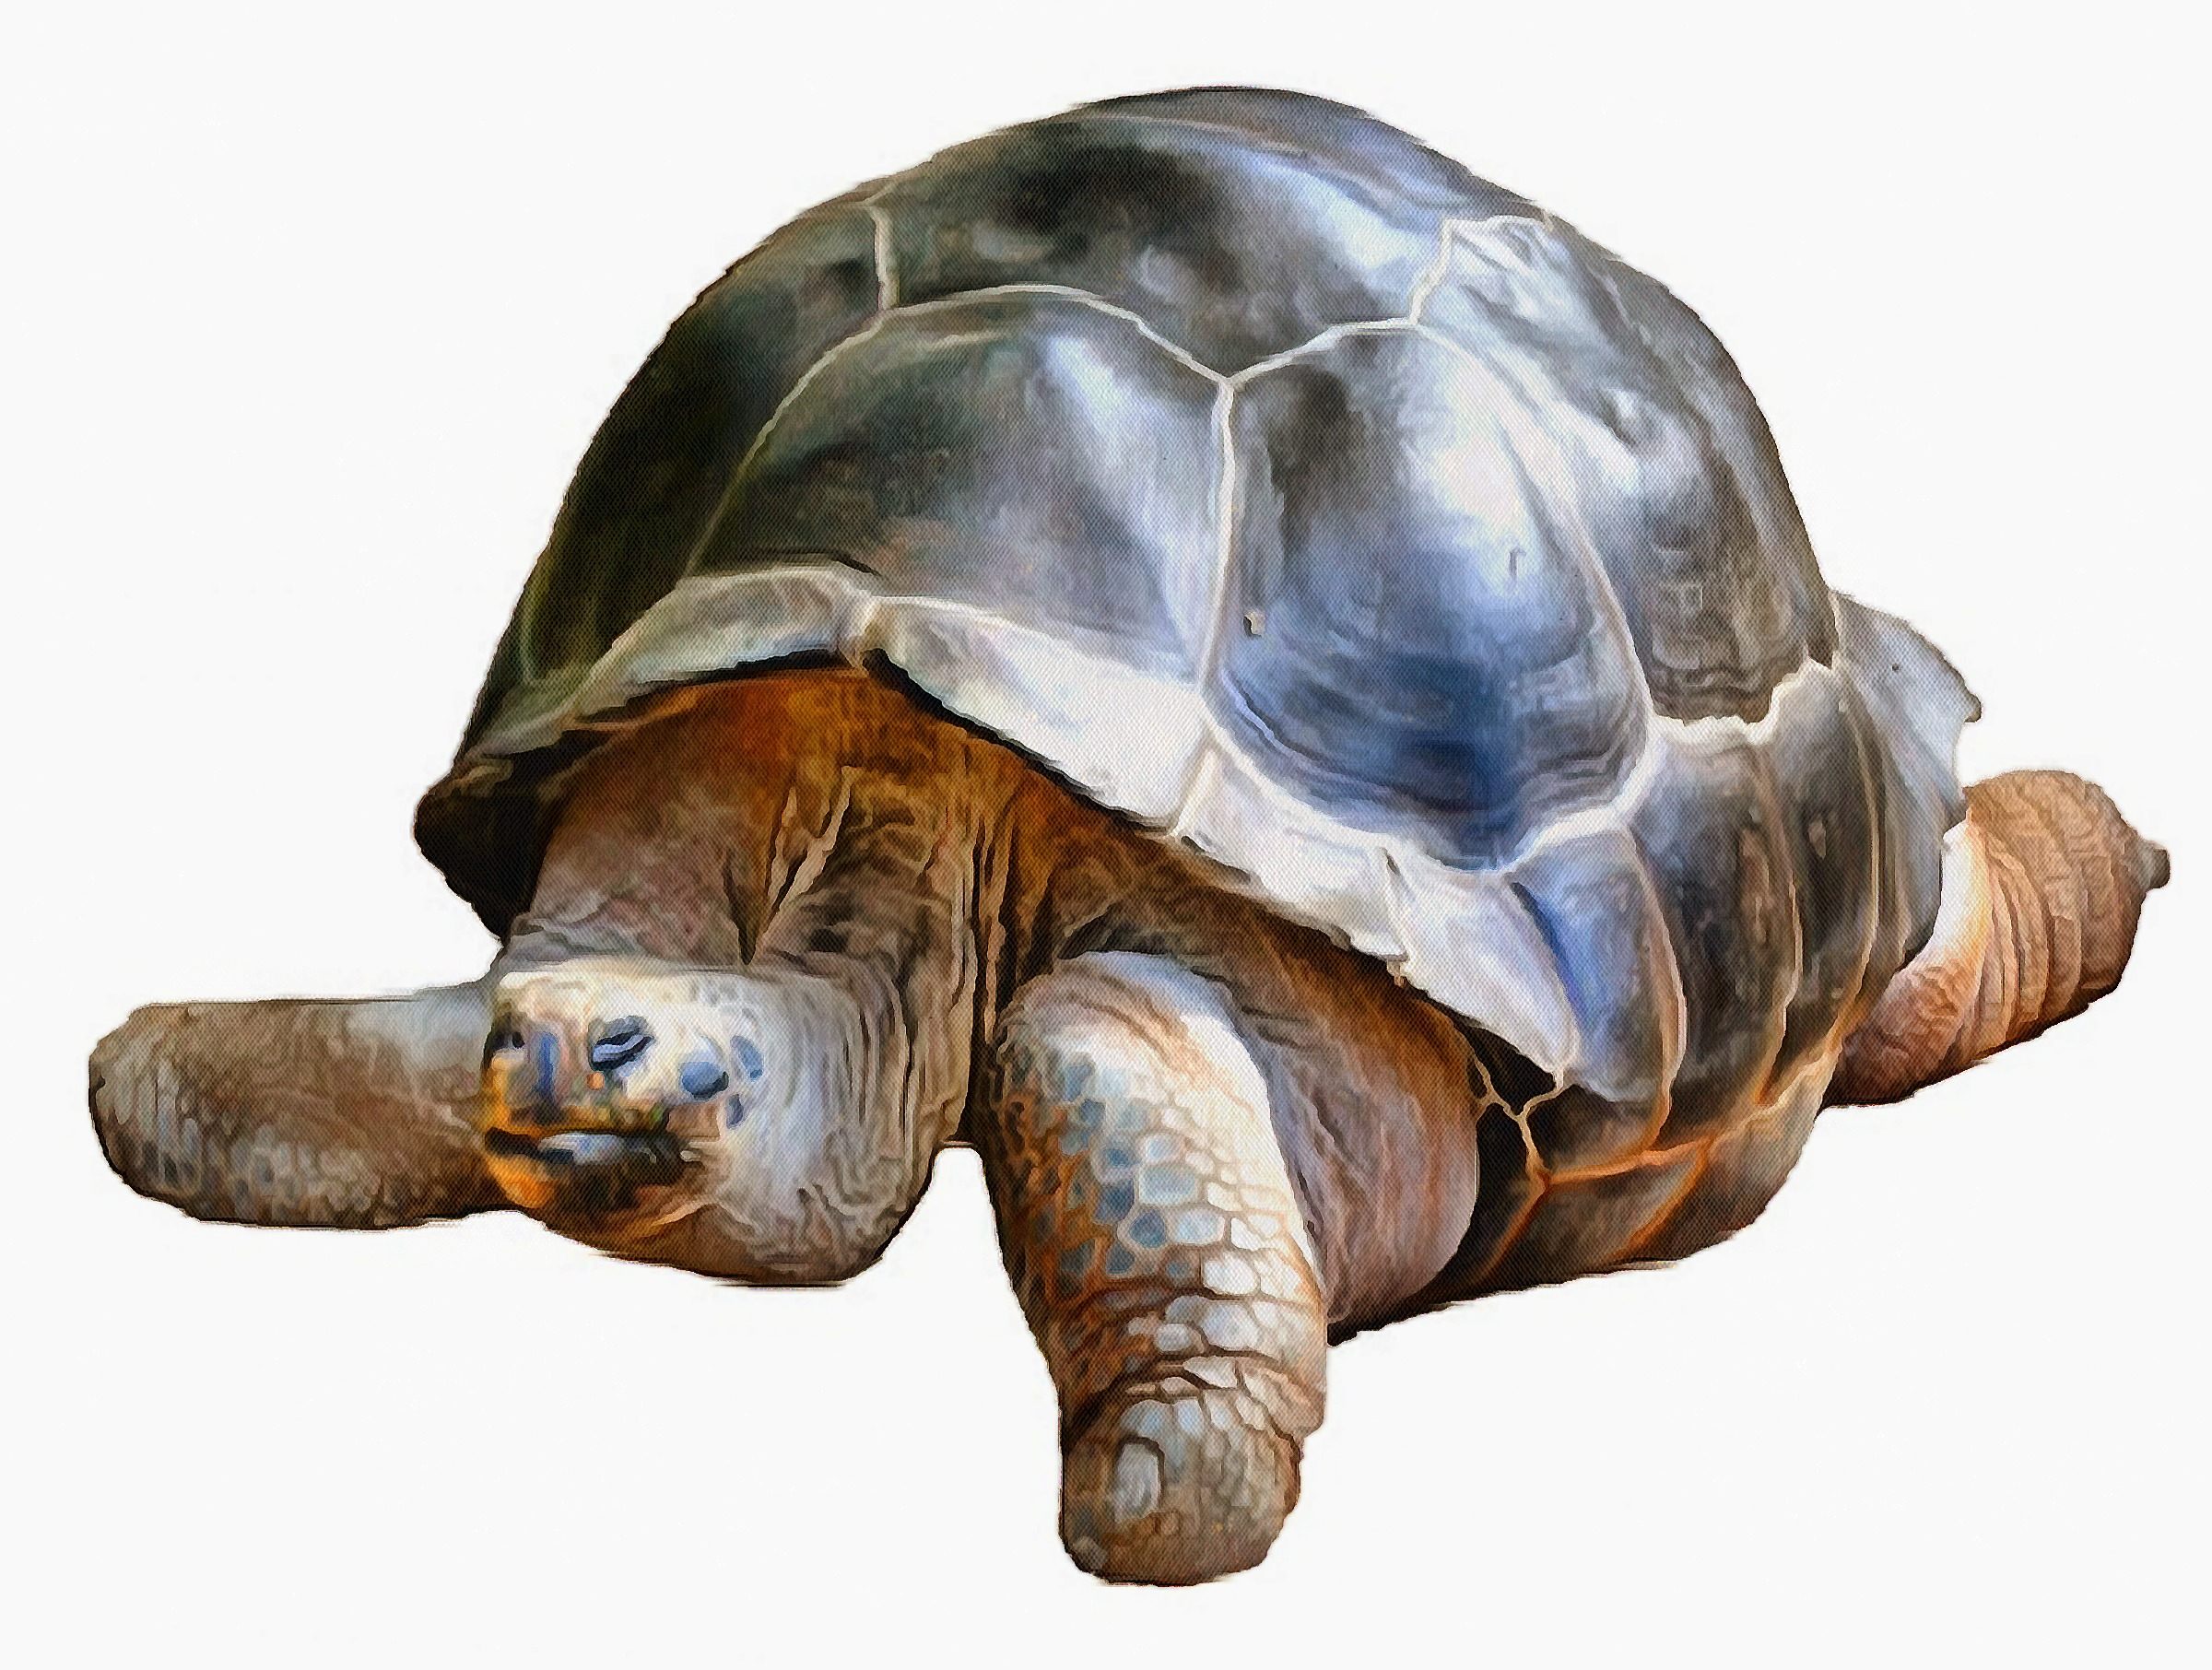 Turtle, Tortoise, Turtle free images, chelonian, leatherback, turtle, – Turtle free images, Tortoise free , Turtle stock free images, Download free images turtles, tortoise free public domain images, tortoise public domain images!